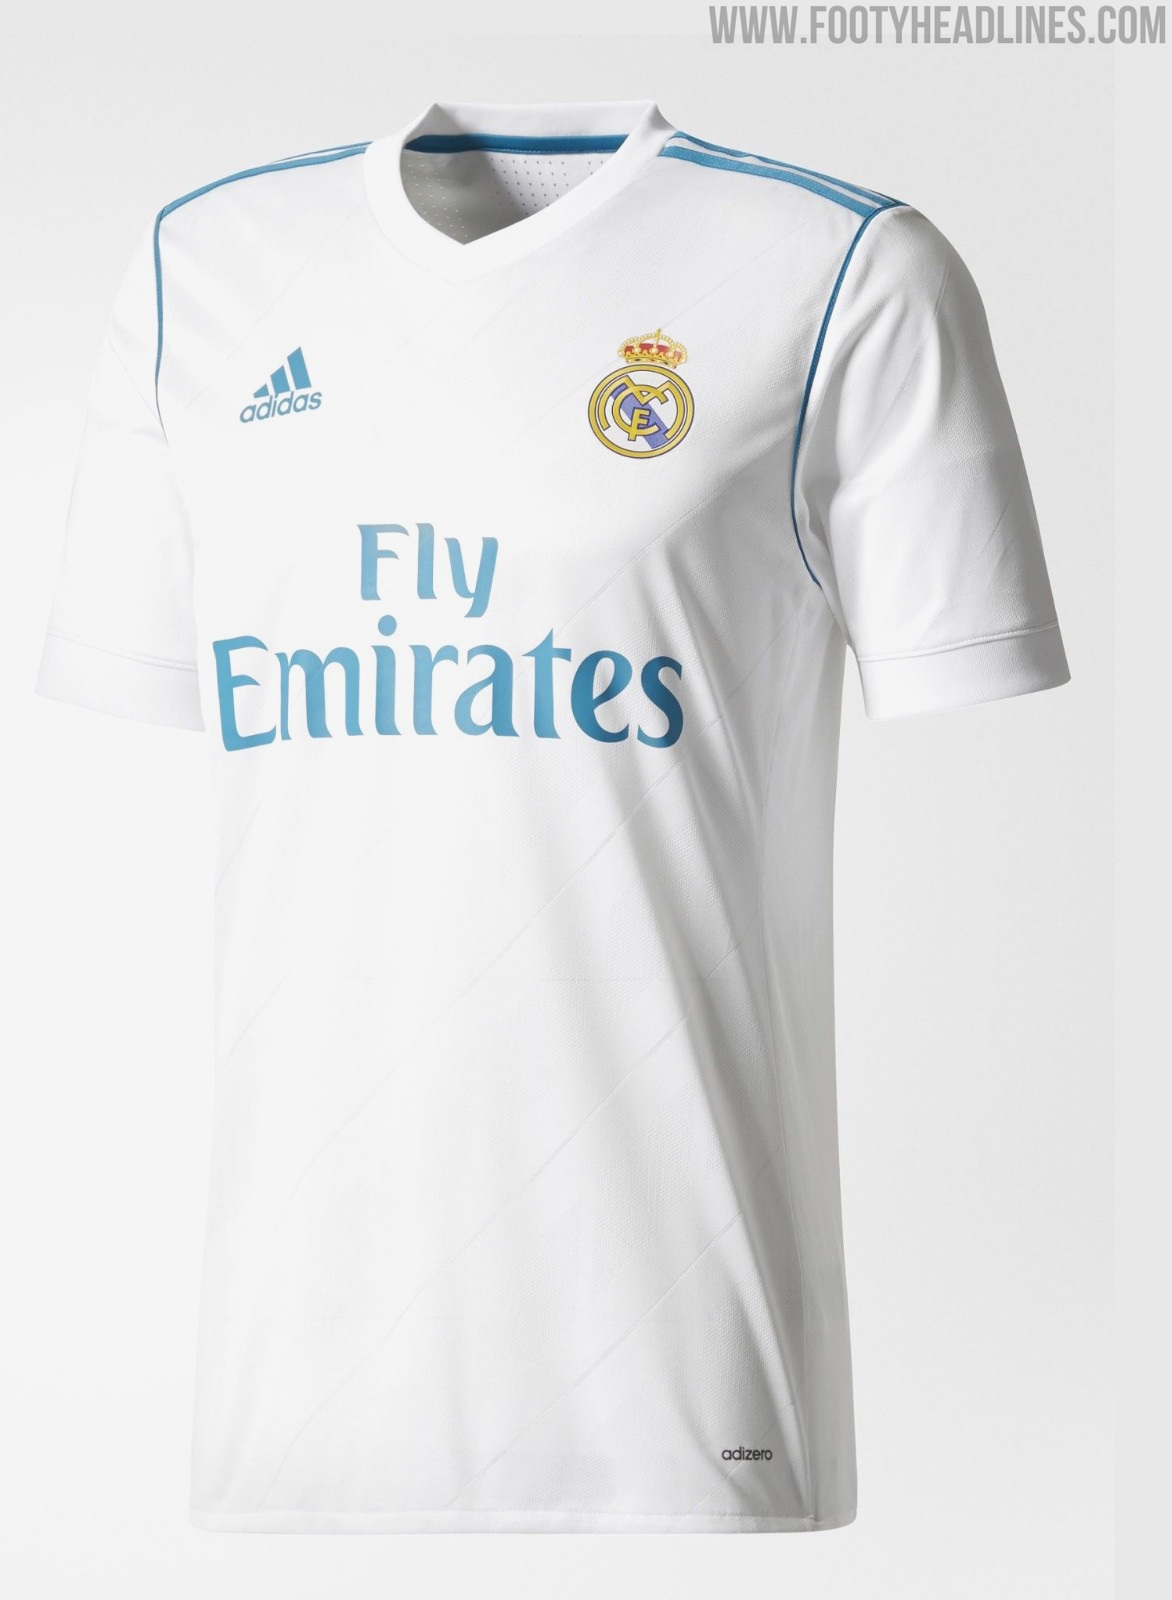 FC Barcelona & Real Madrid 2010-2019 Home Kits - Football Kit Evolution ...